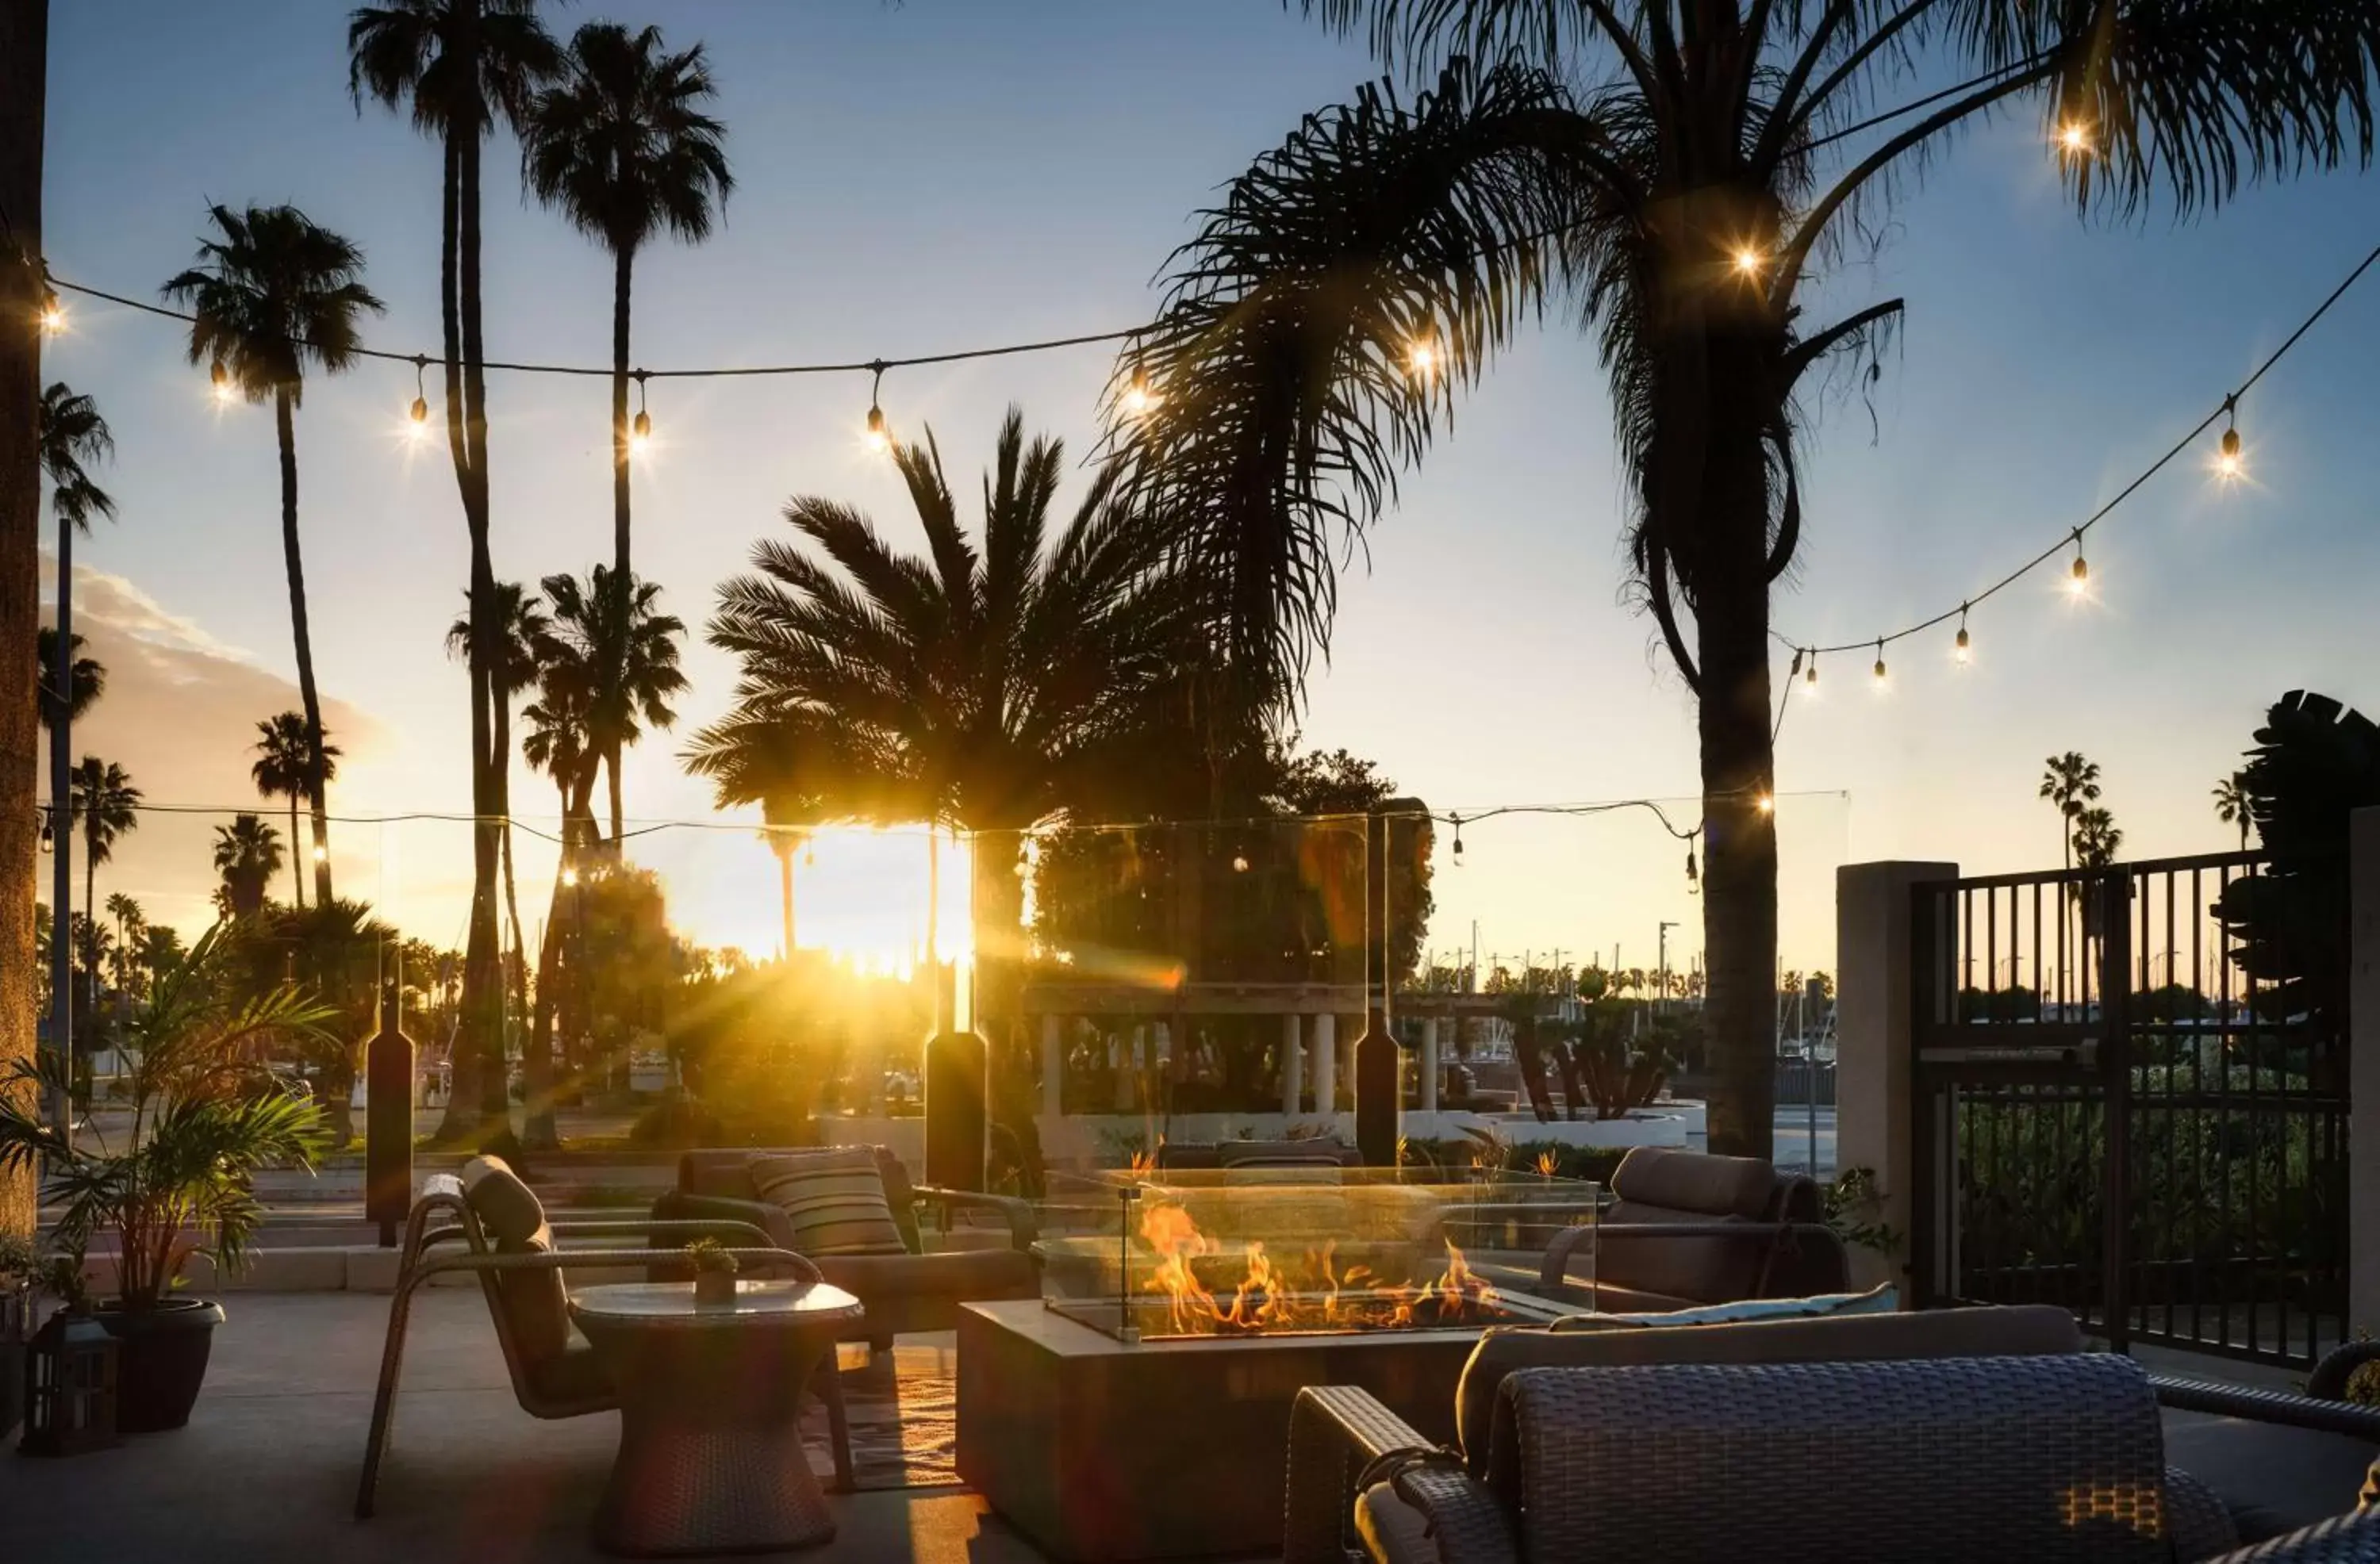 Restaurant/places to eat, Sunrise/Sunset in Sonesta Redondo Beach and Marina